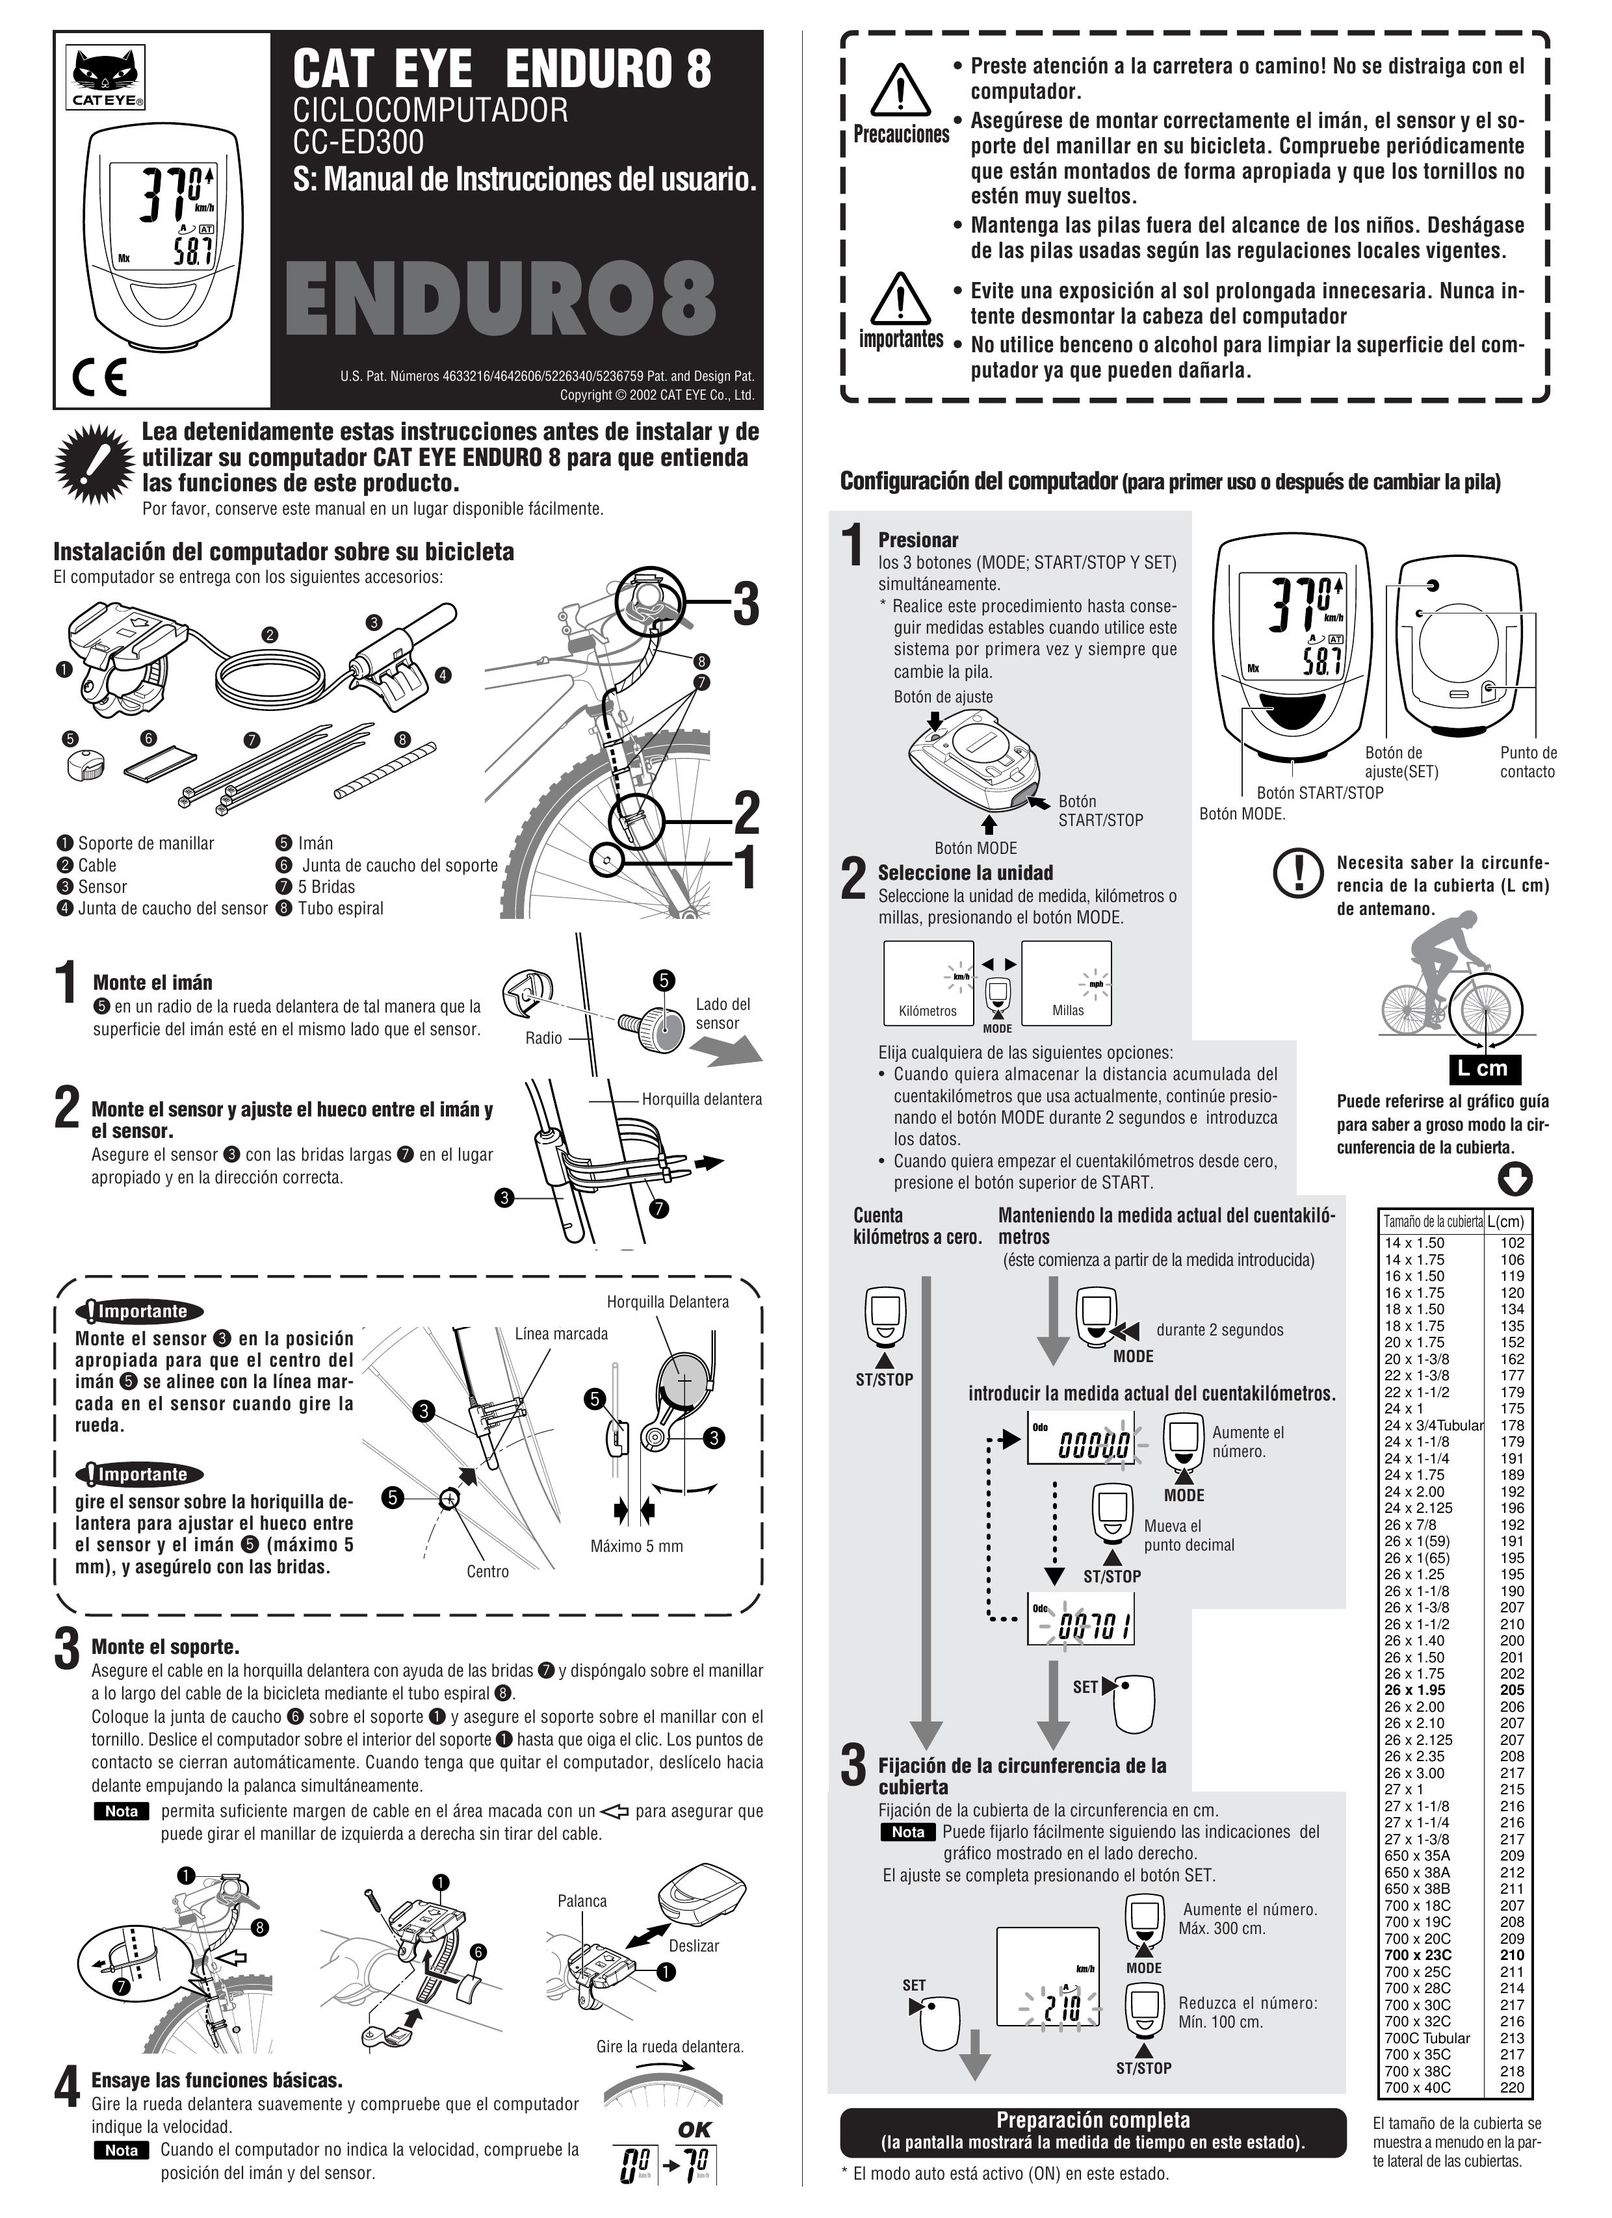 Cateye CC-ED300 Cyclometer User Manual